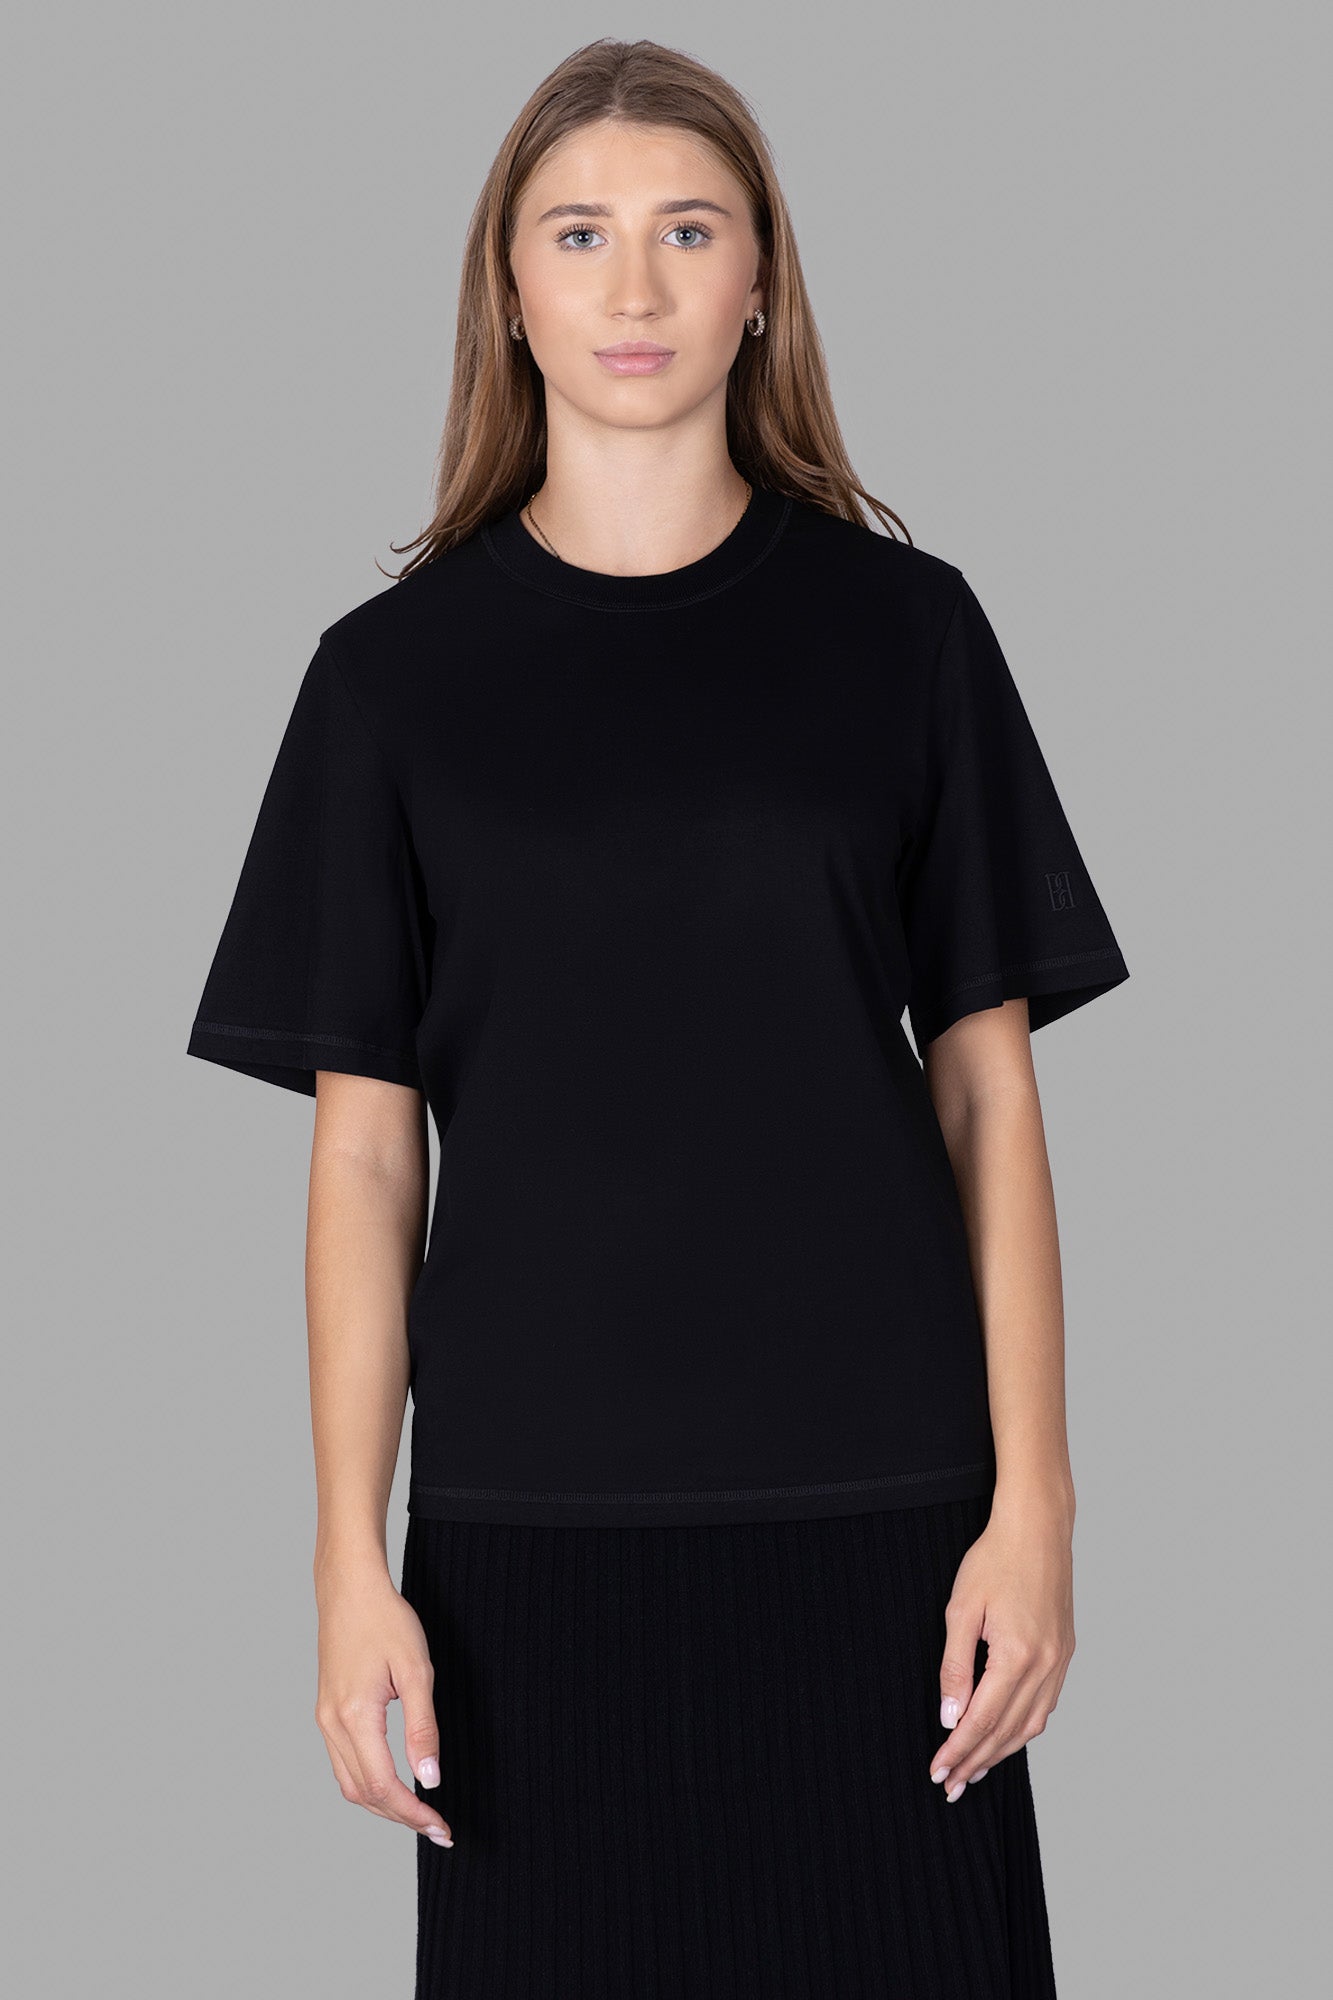 Hedil Black T-shirt